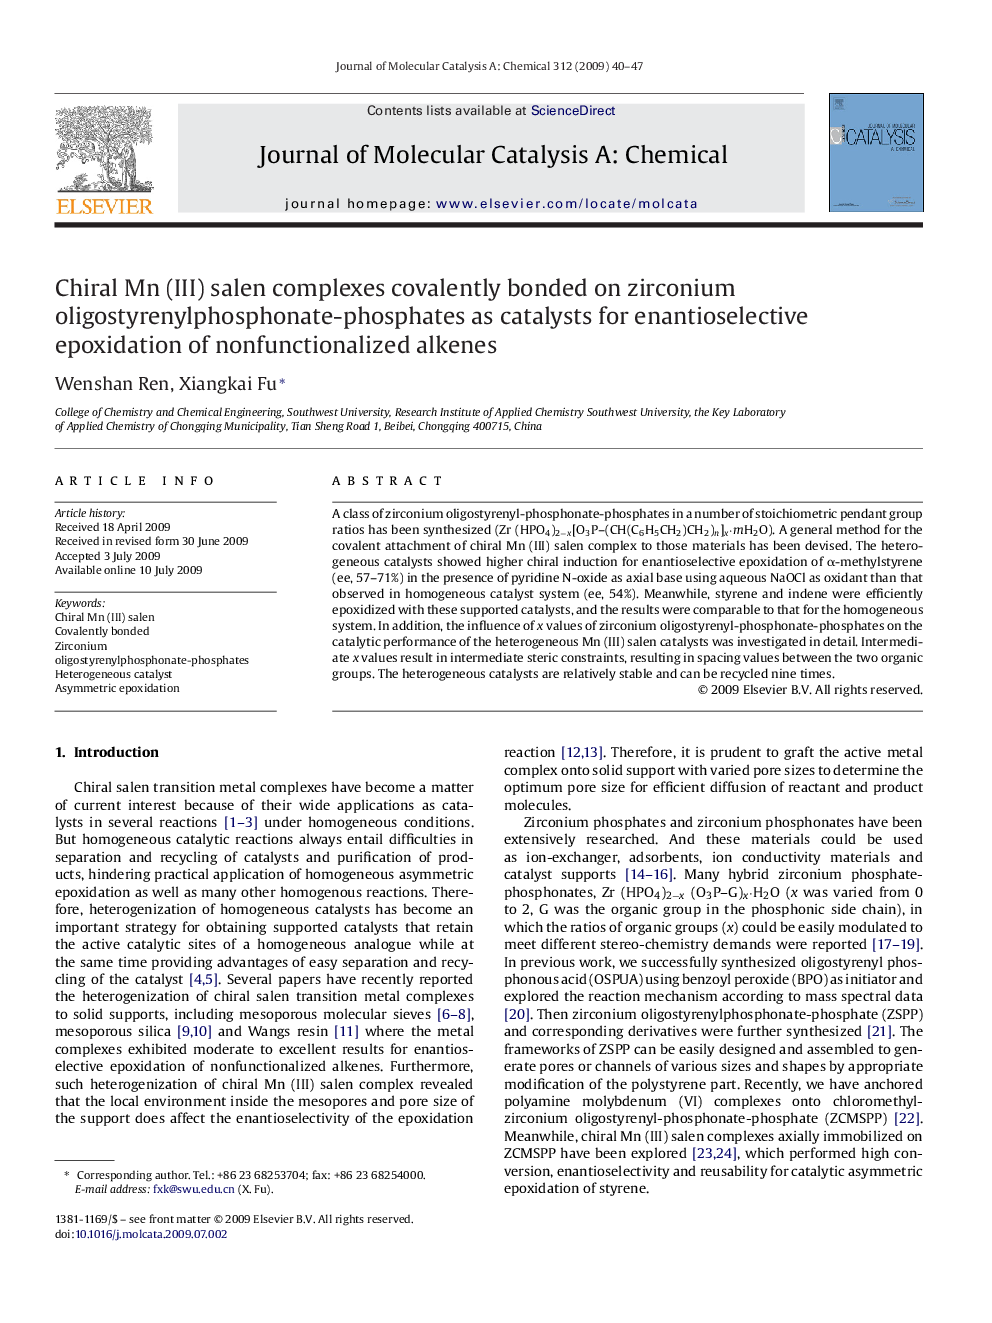 Chiral Mn (III) salen complexes covalently bonded on zirconium oligostyrenylphosphonate-phosphates as catalysts for enantioselective epoxidation of nonfunctionalized alkenes